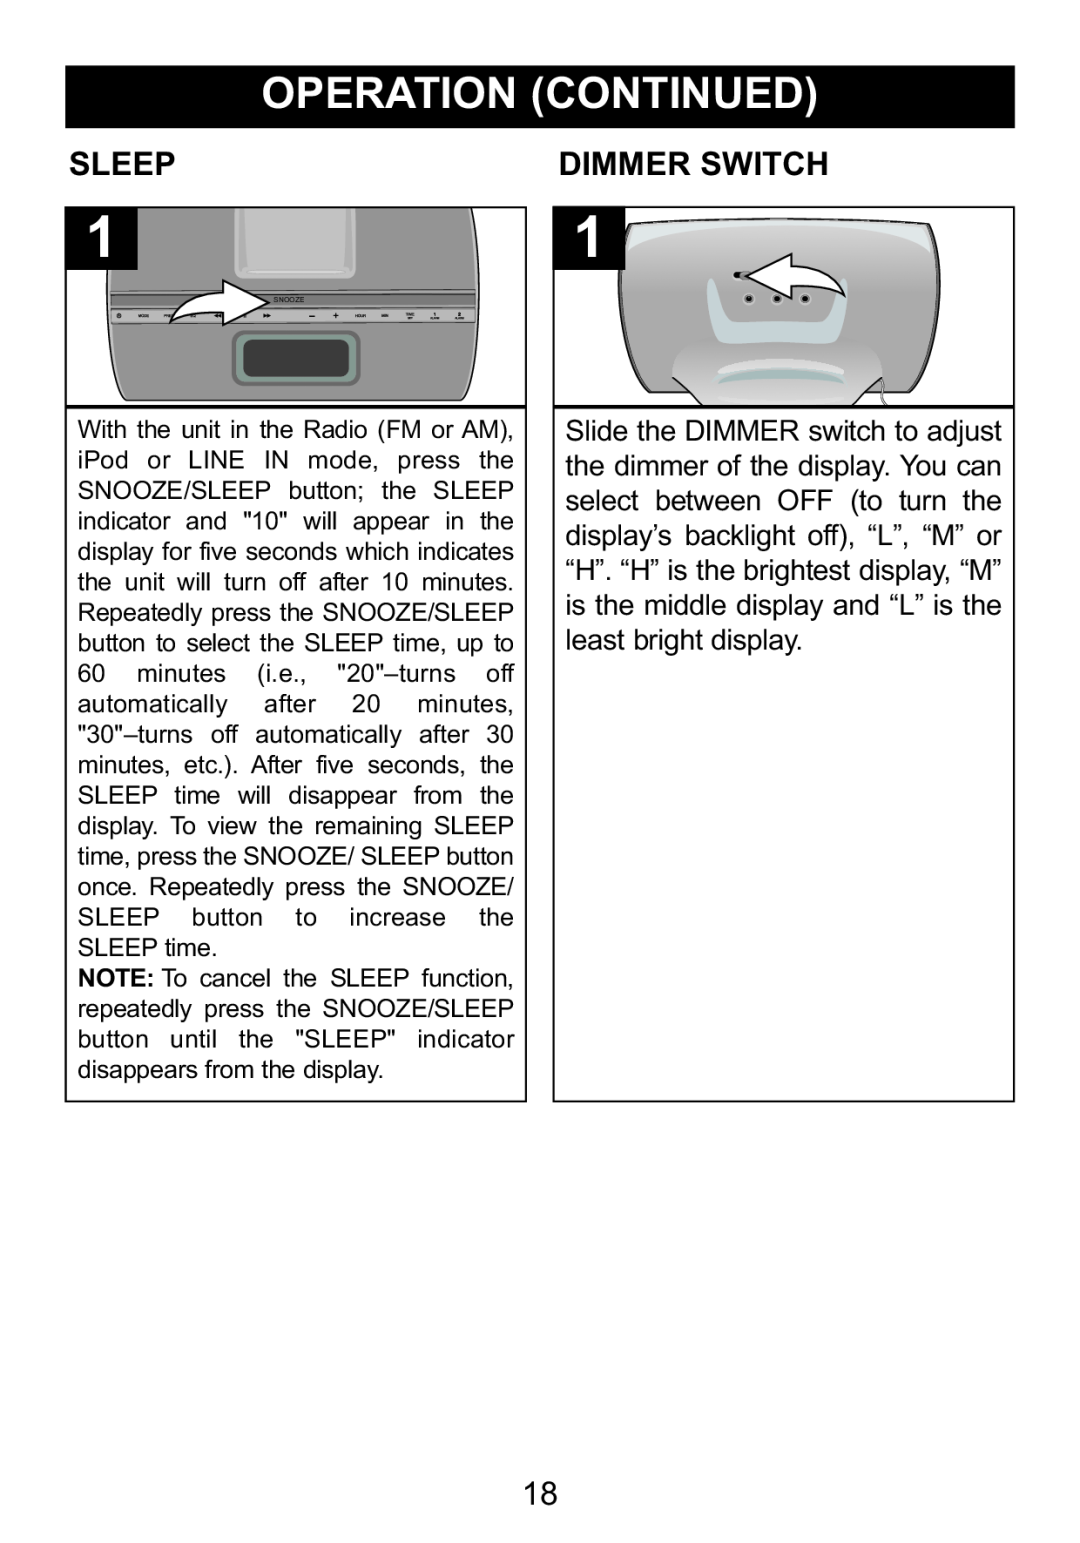 Memorex Mi4014 manual Sleep, Dimmer Switch 